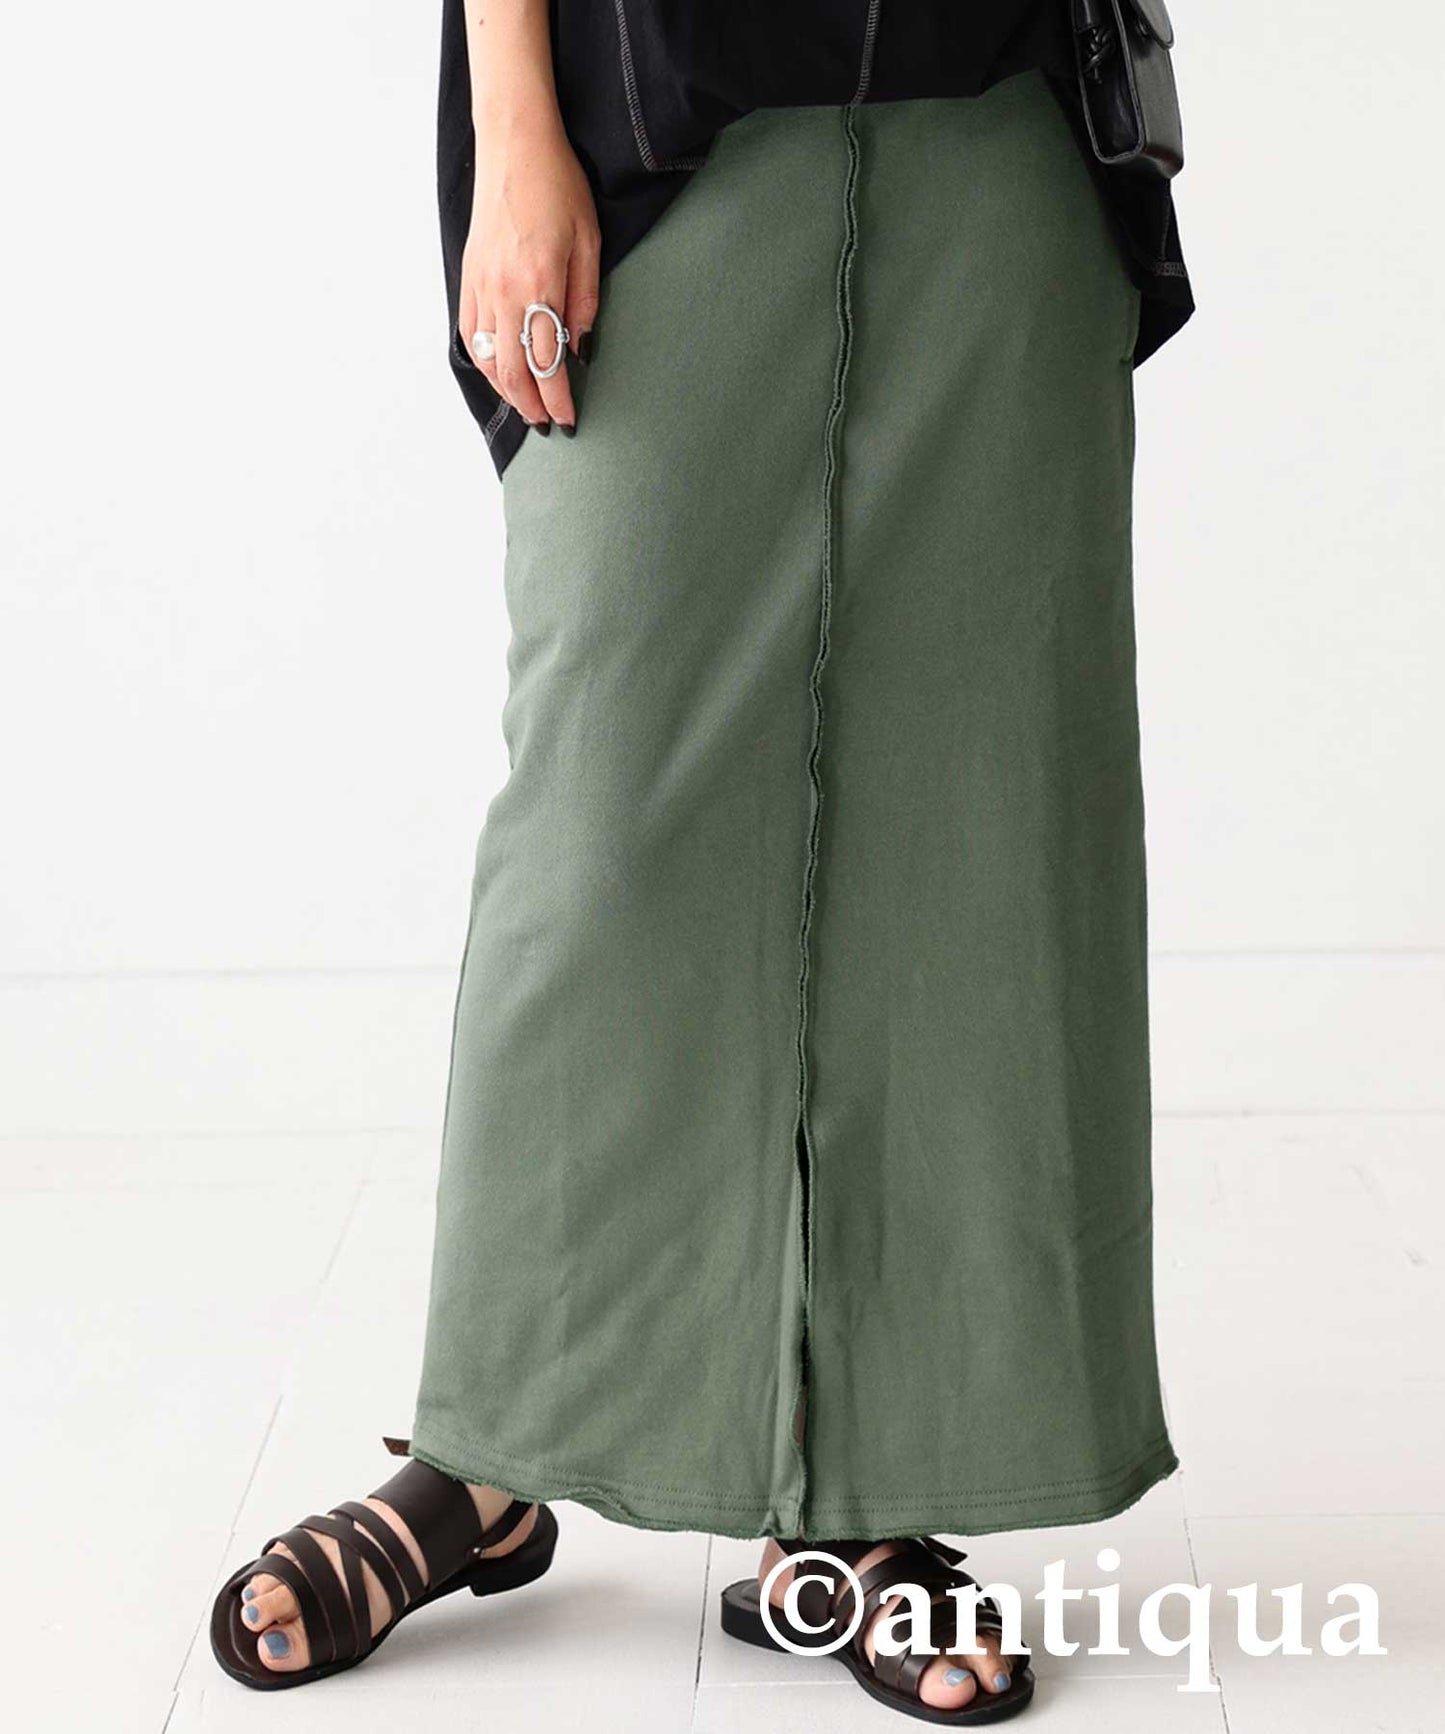 Pile fabric Long Ladies skirt cotton 100%